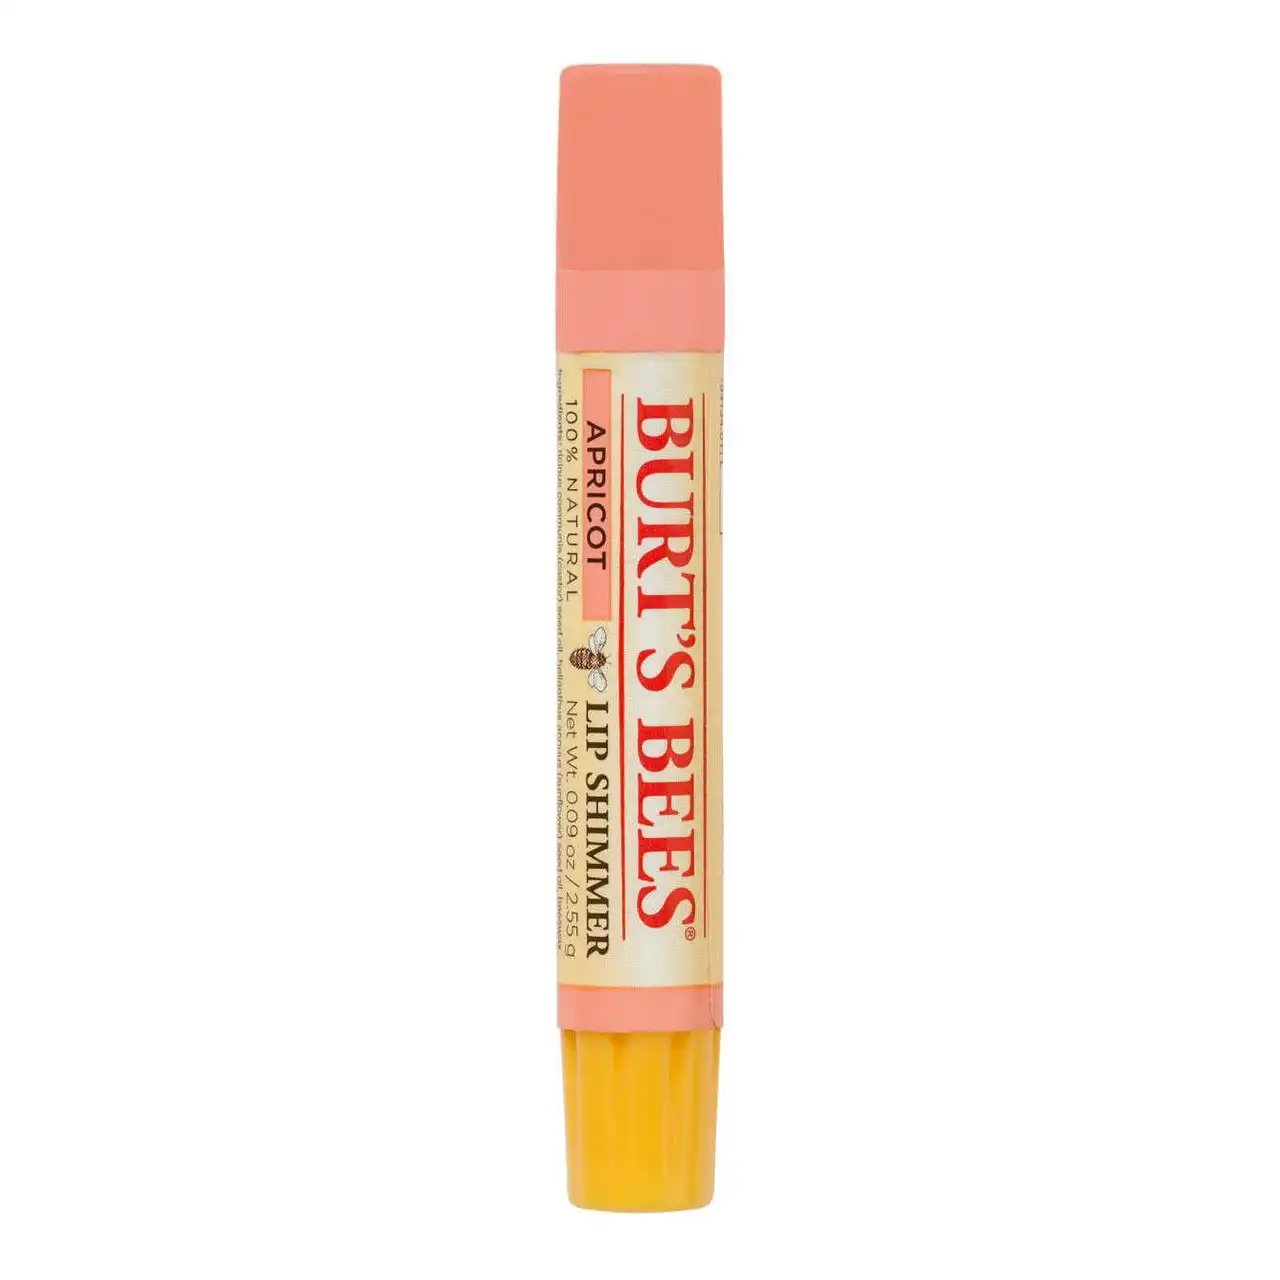 Burt's Bees Apricot Lip Shimmer 2.6g